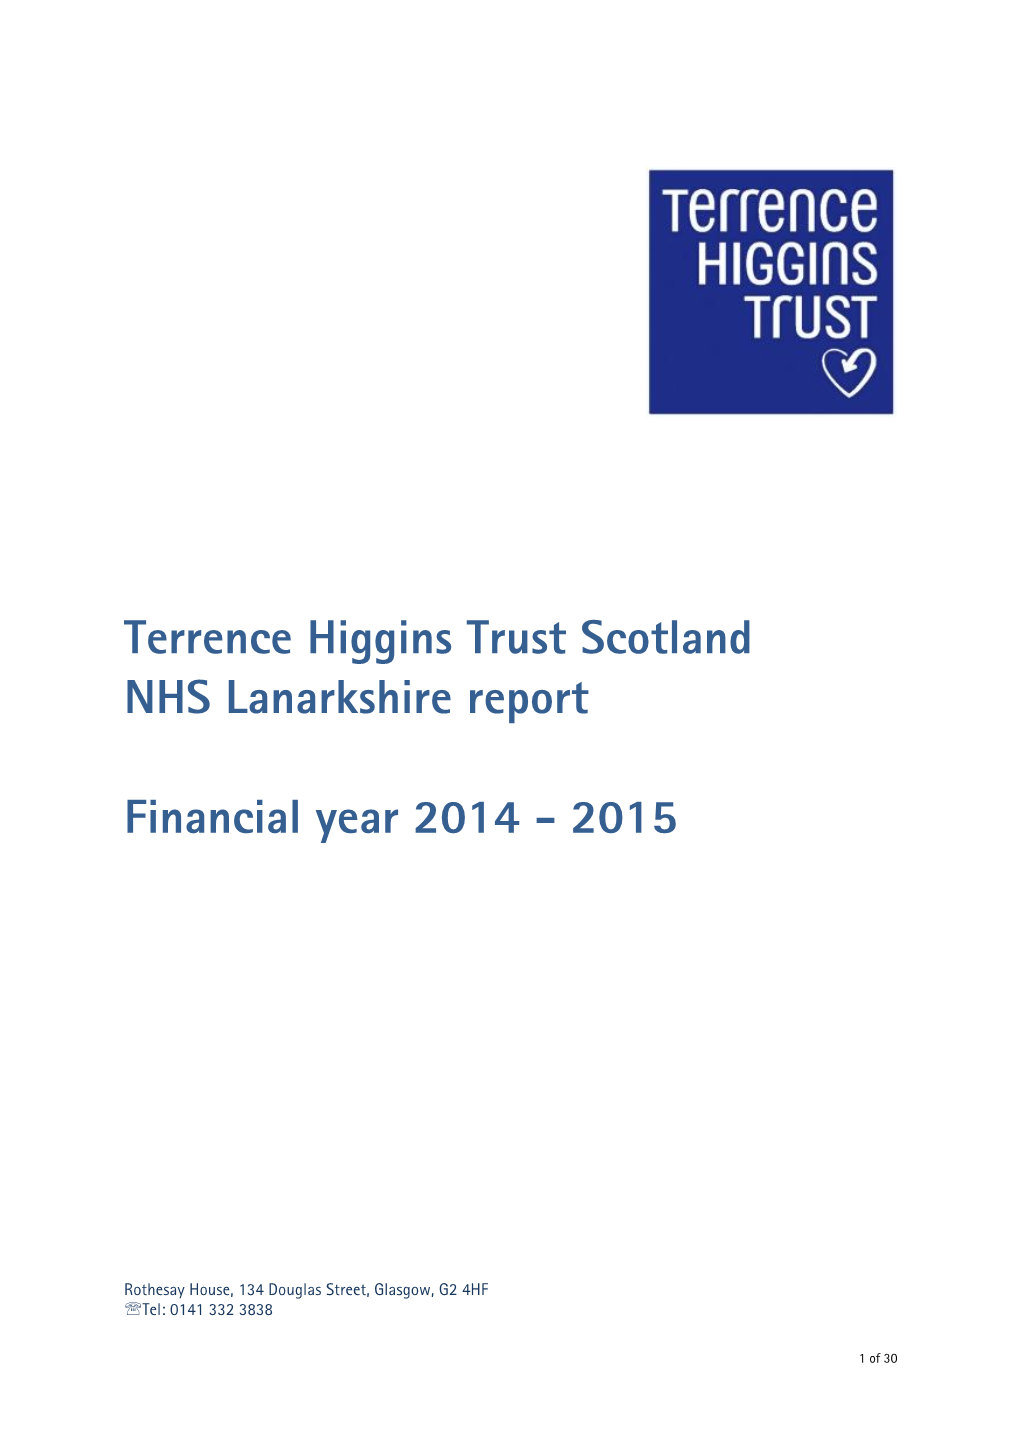 Terrence Higgins Trust Scotland NHS Lanarkshire Report Financial Year